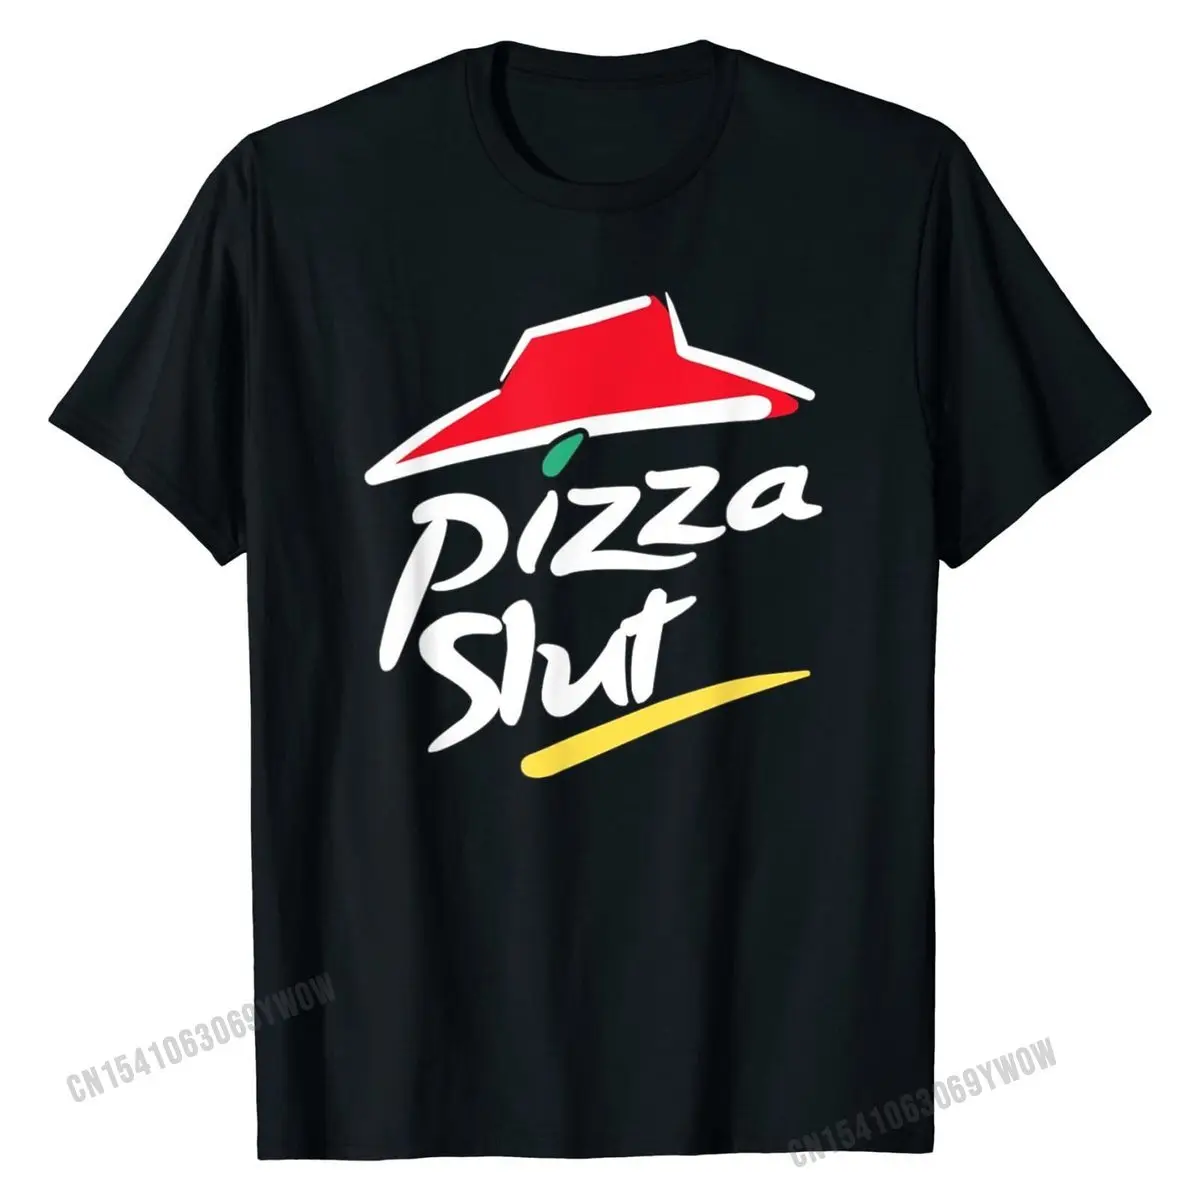 

Pizza Slut Funny Parody Fast Food Humor Joke T-Shirt Cotton Men's Tshirts Summer Tops & Tees Funny Street